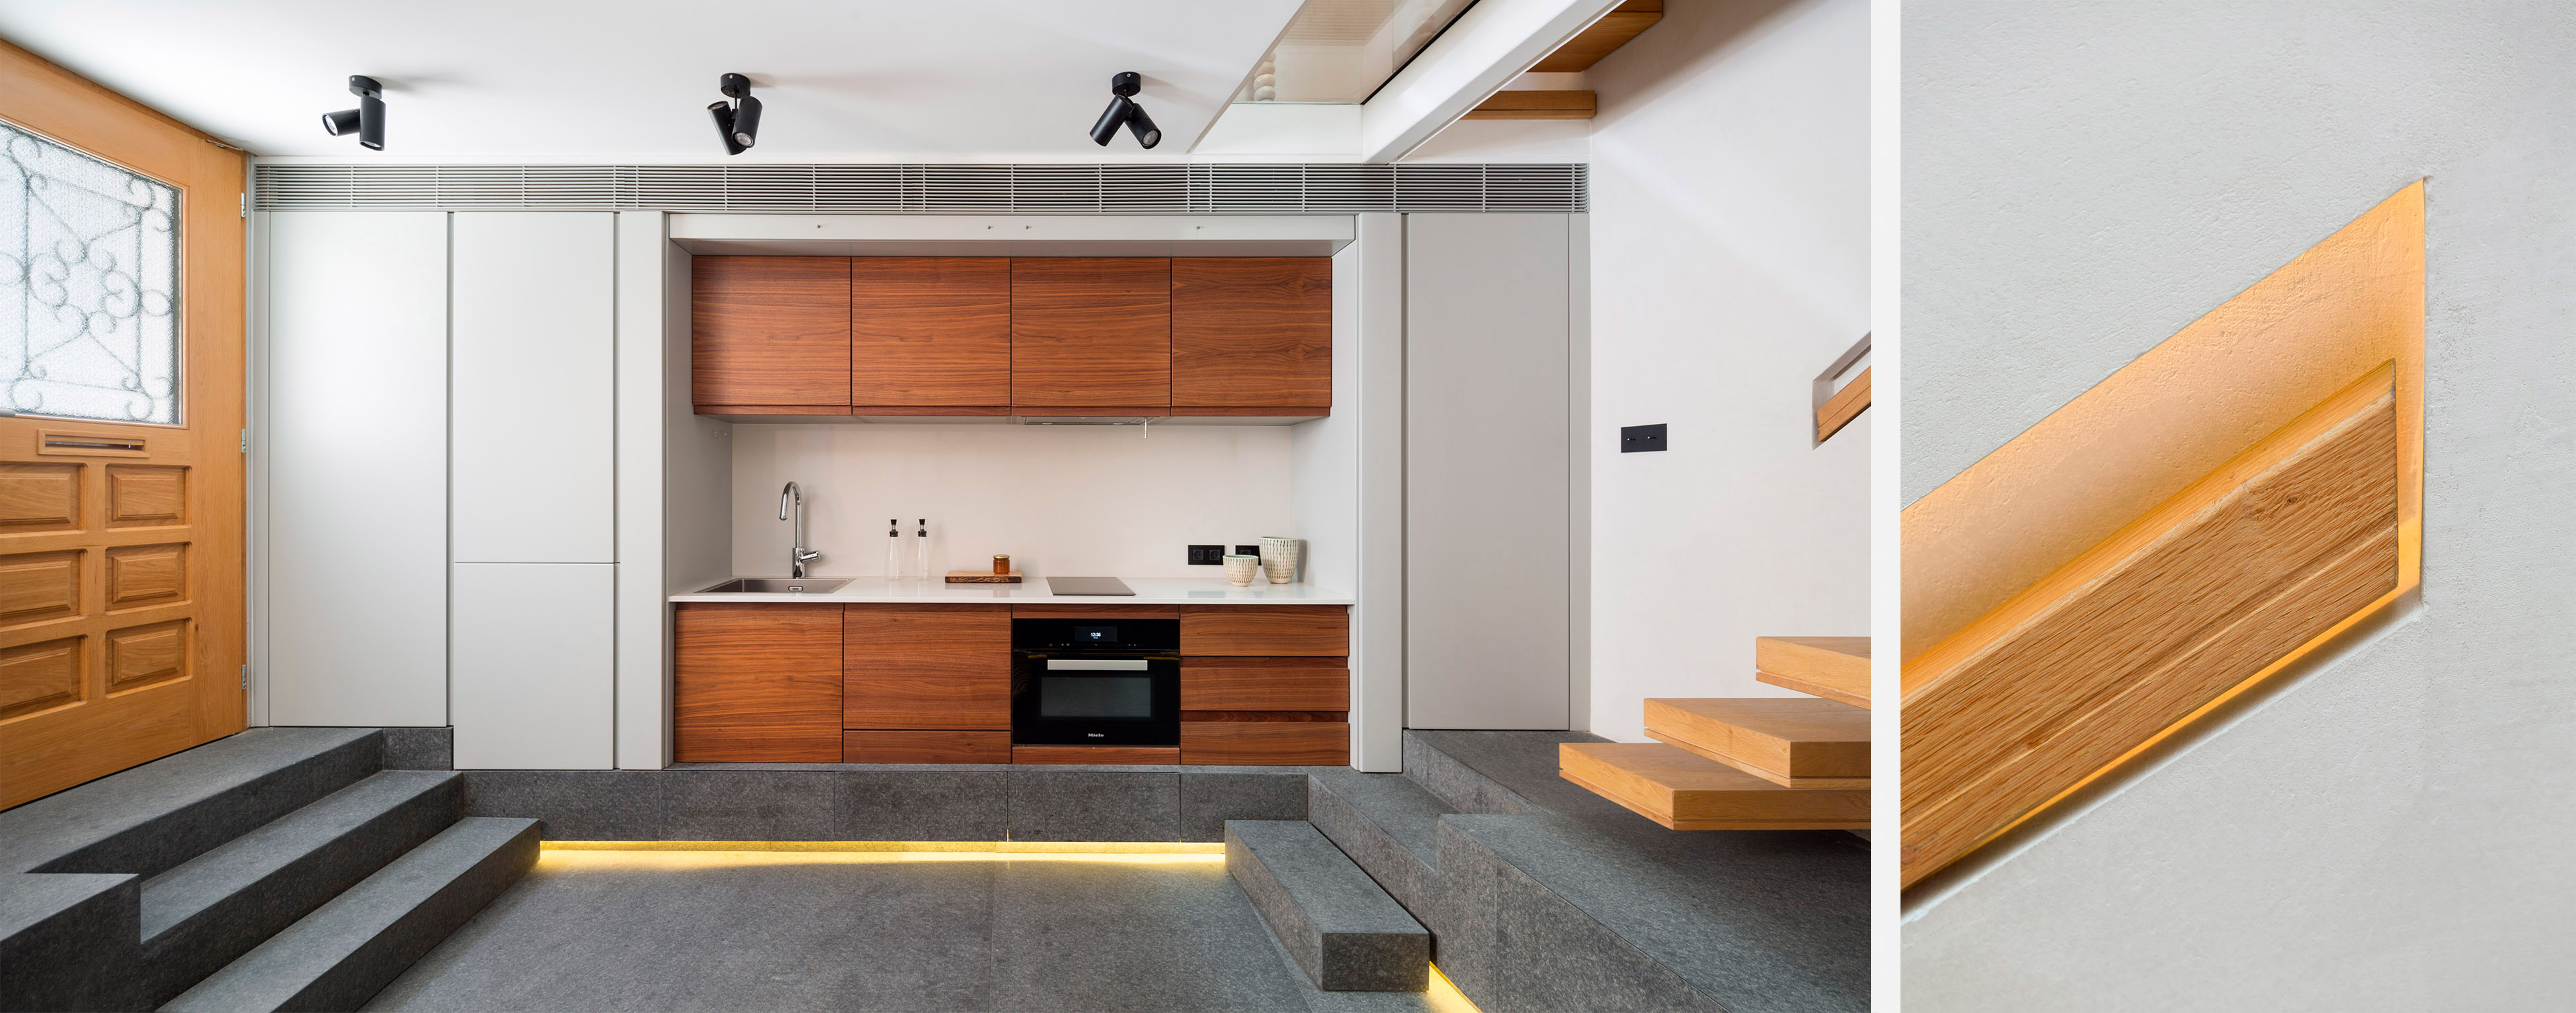 luv studio luxury architects algarve nano house IMG 01 - Nano House